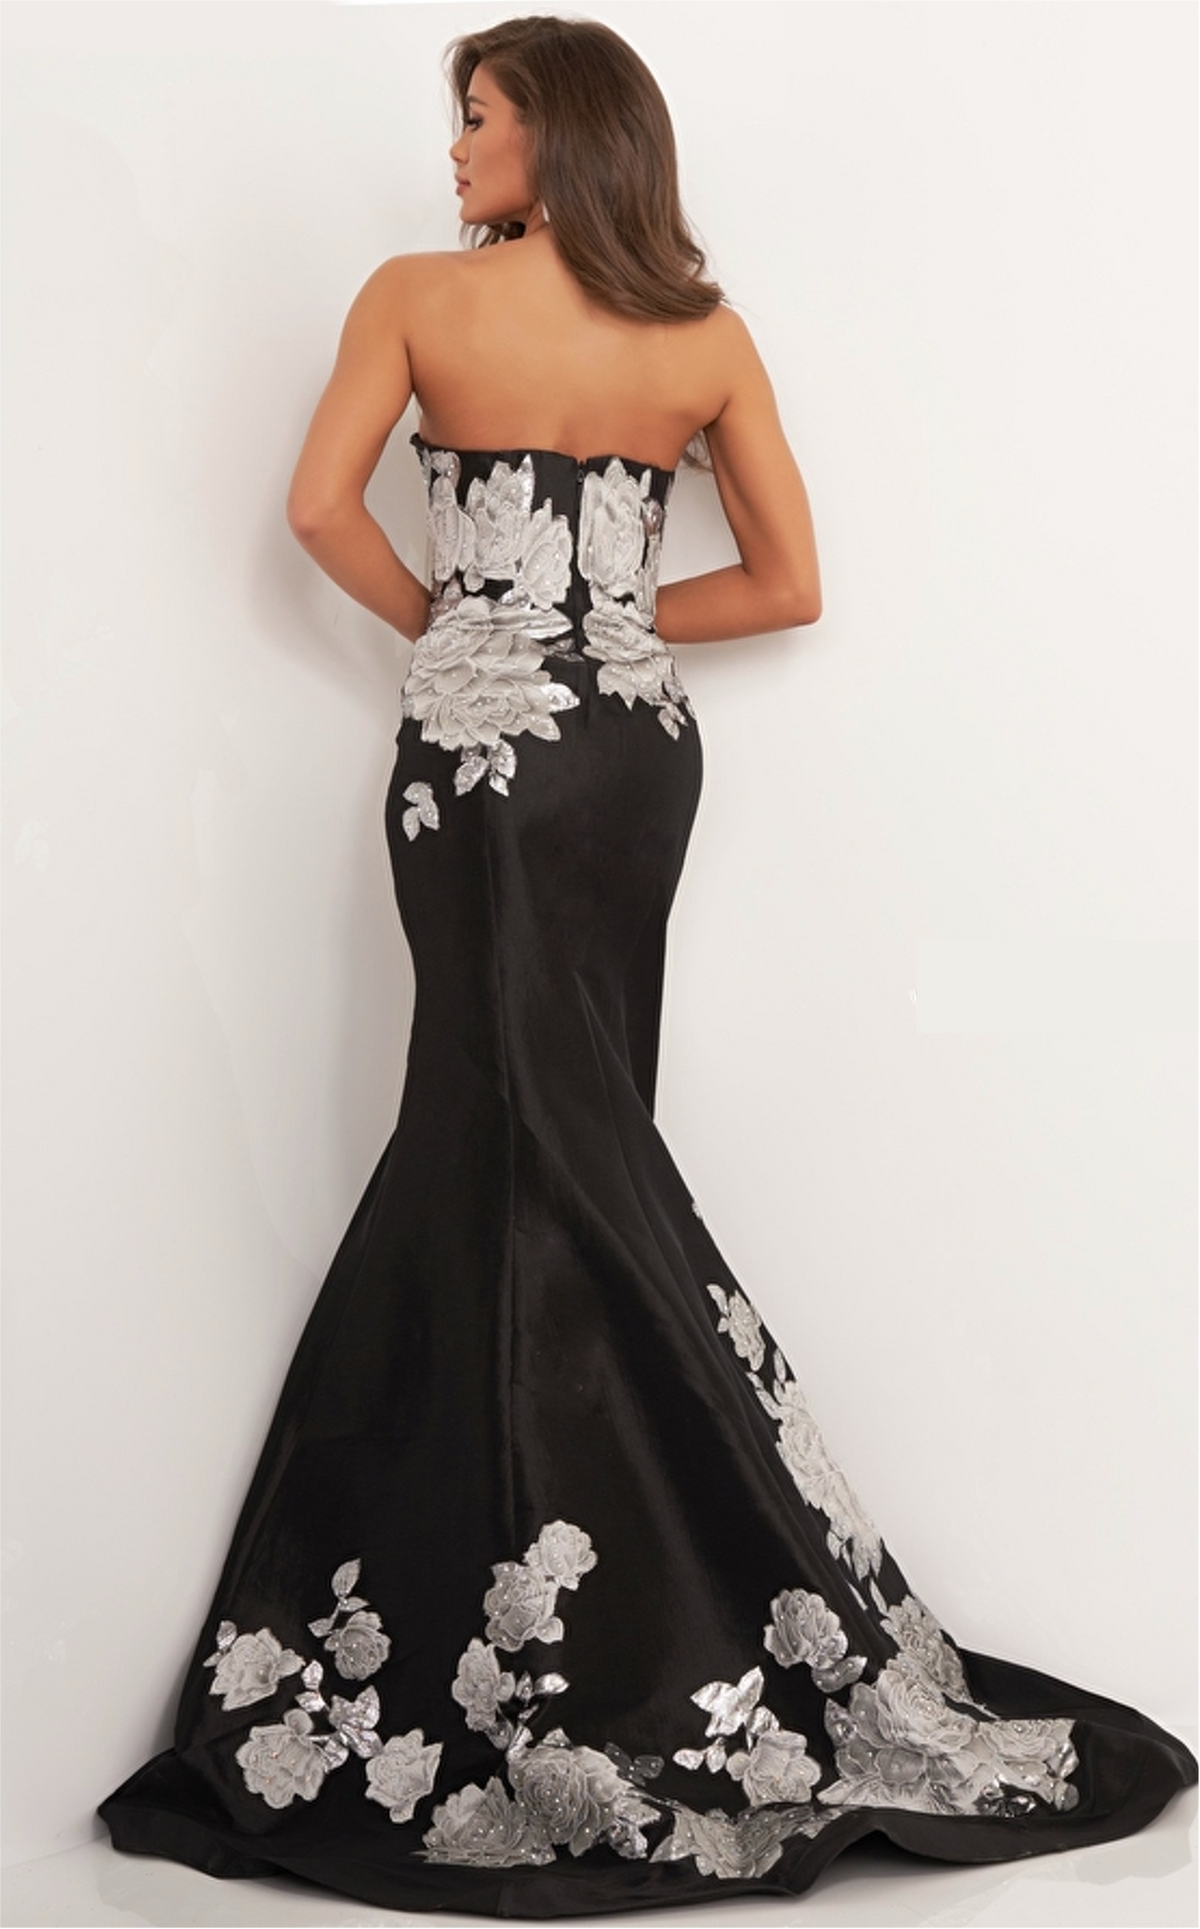 Jovani - 3917 - Black Silver Floral Mermaid Evening Dress